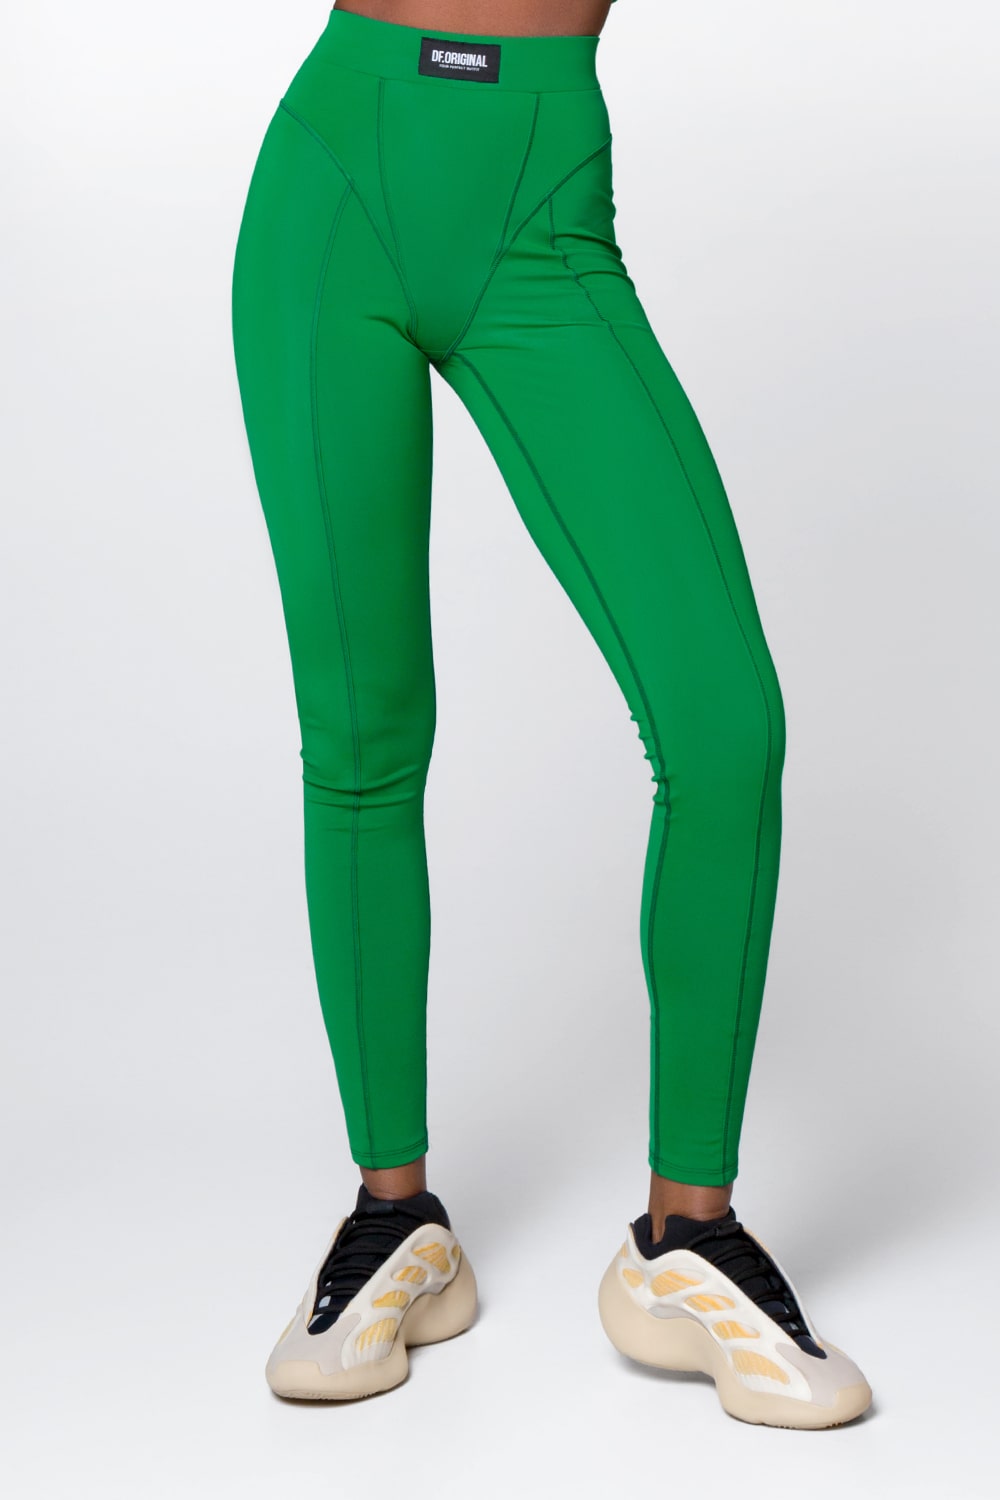 Vogue Green Leggings